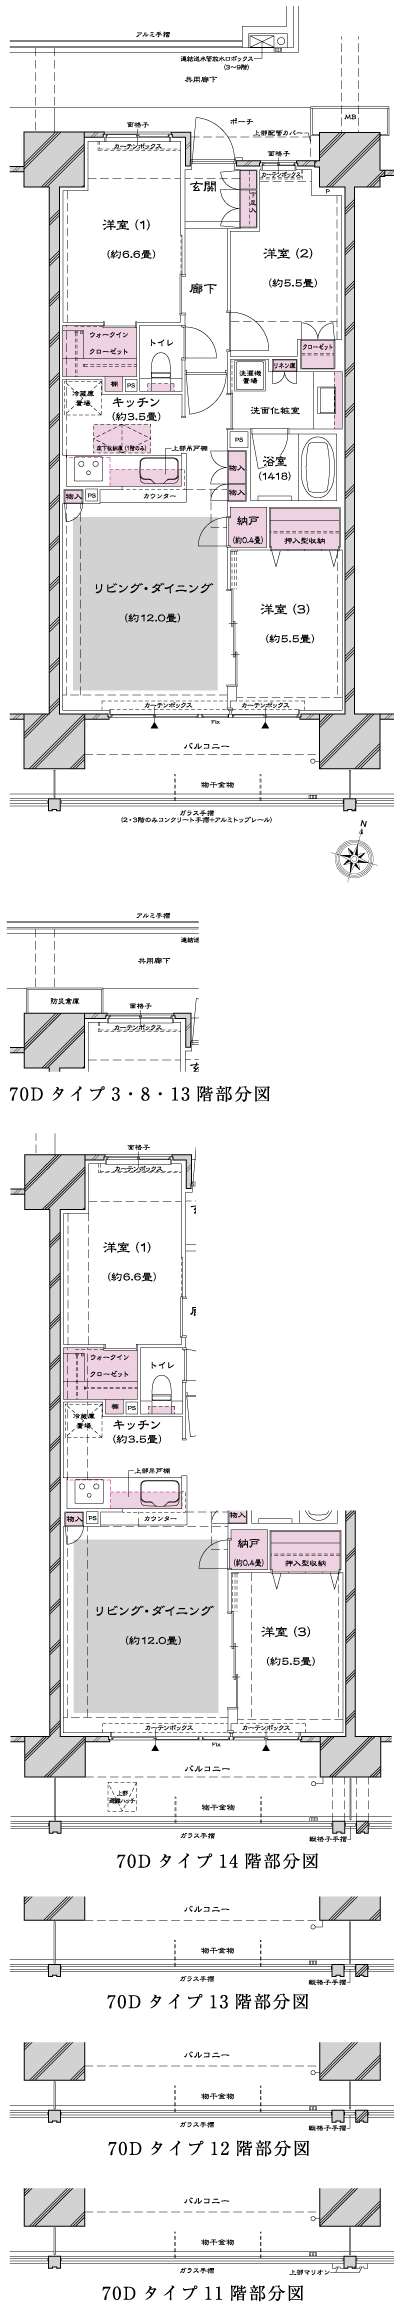 Floor: 3LDK + WIC + N, the area occupied: 73.6 sq m, Price: TBD